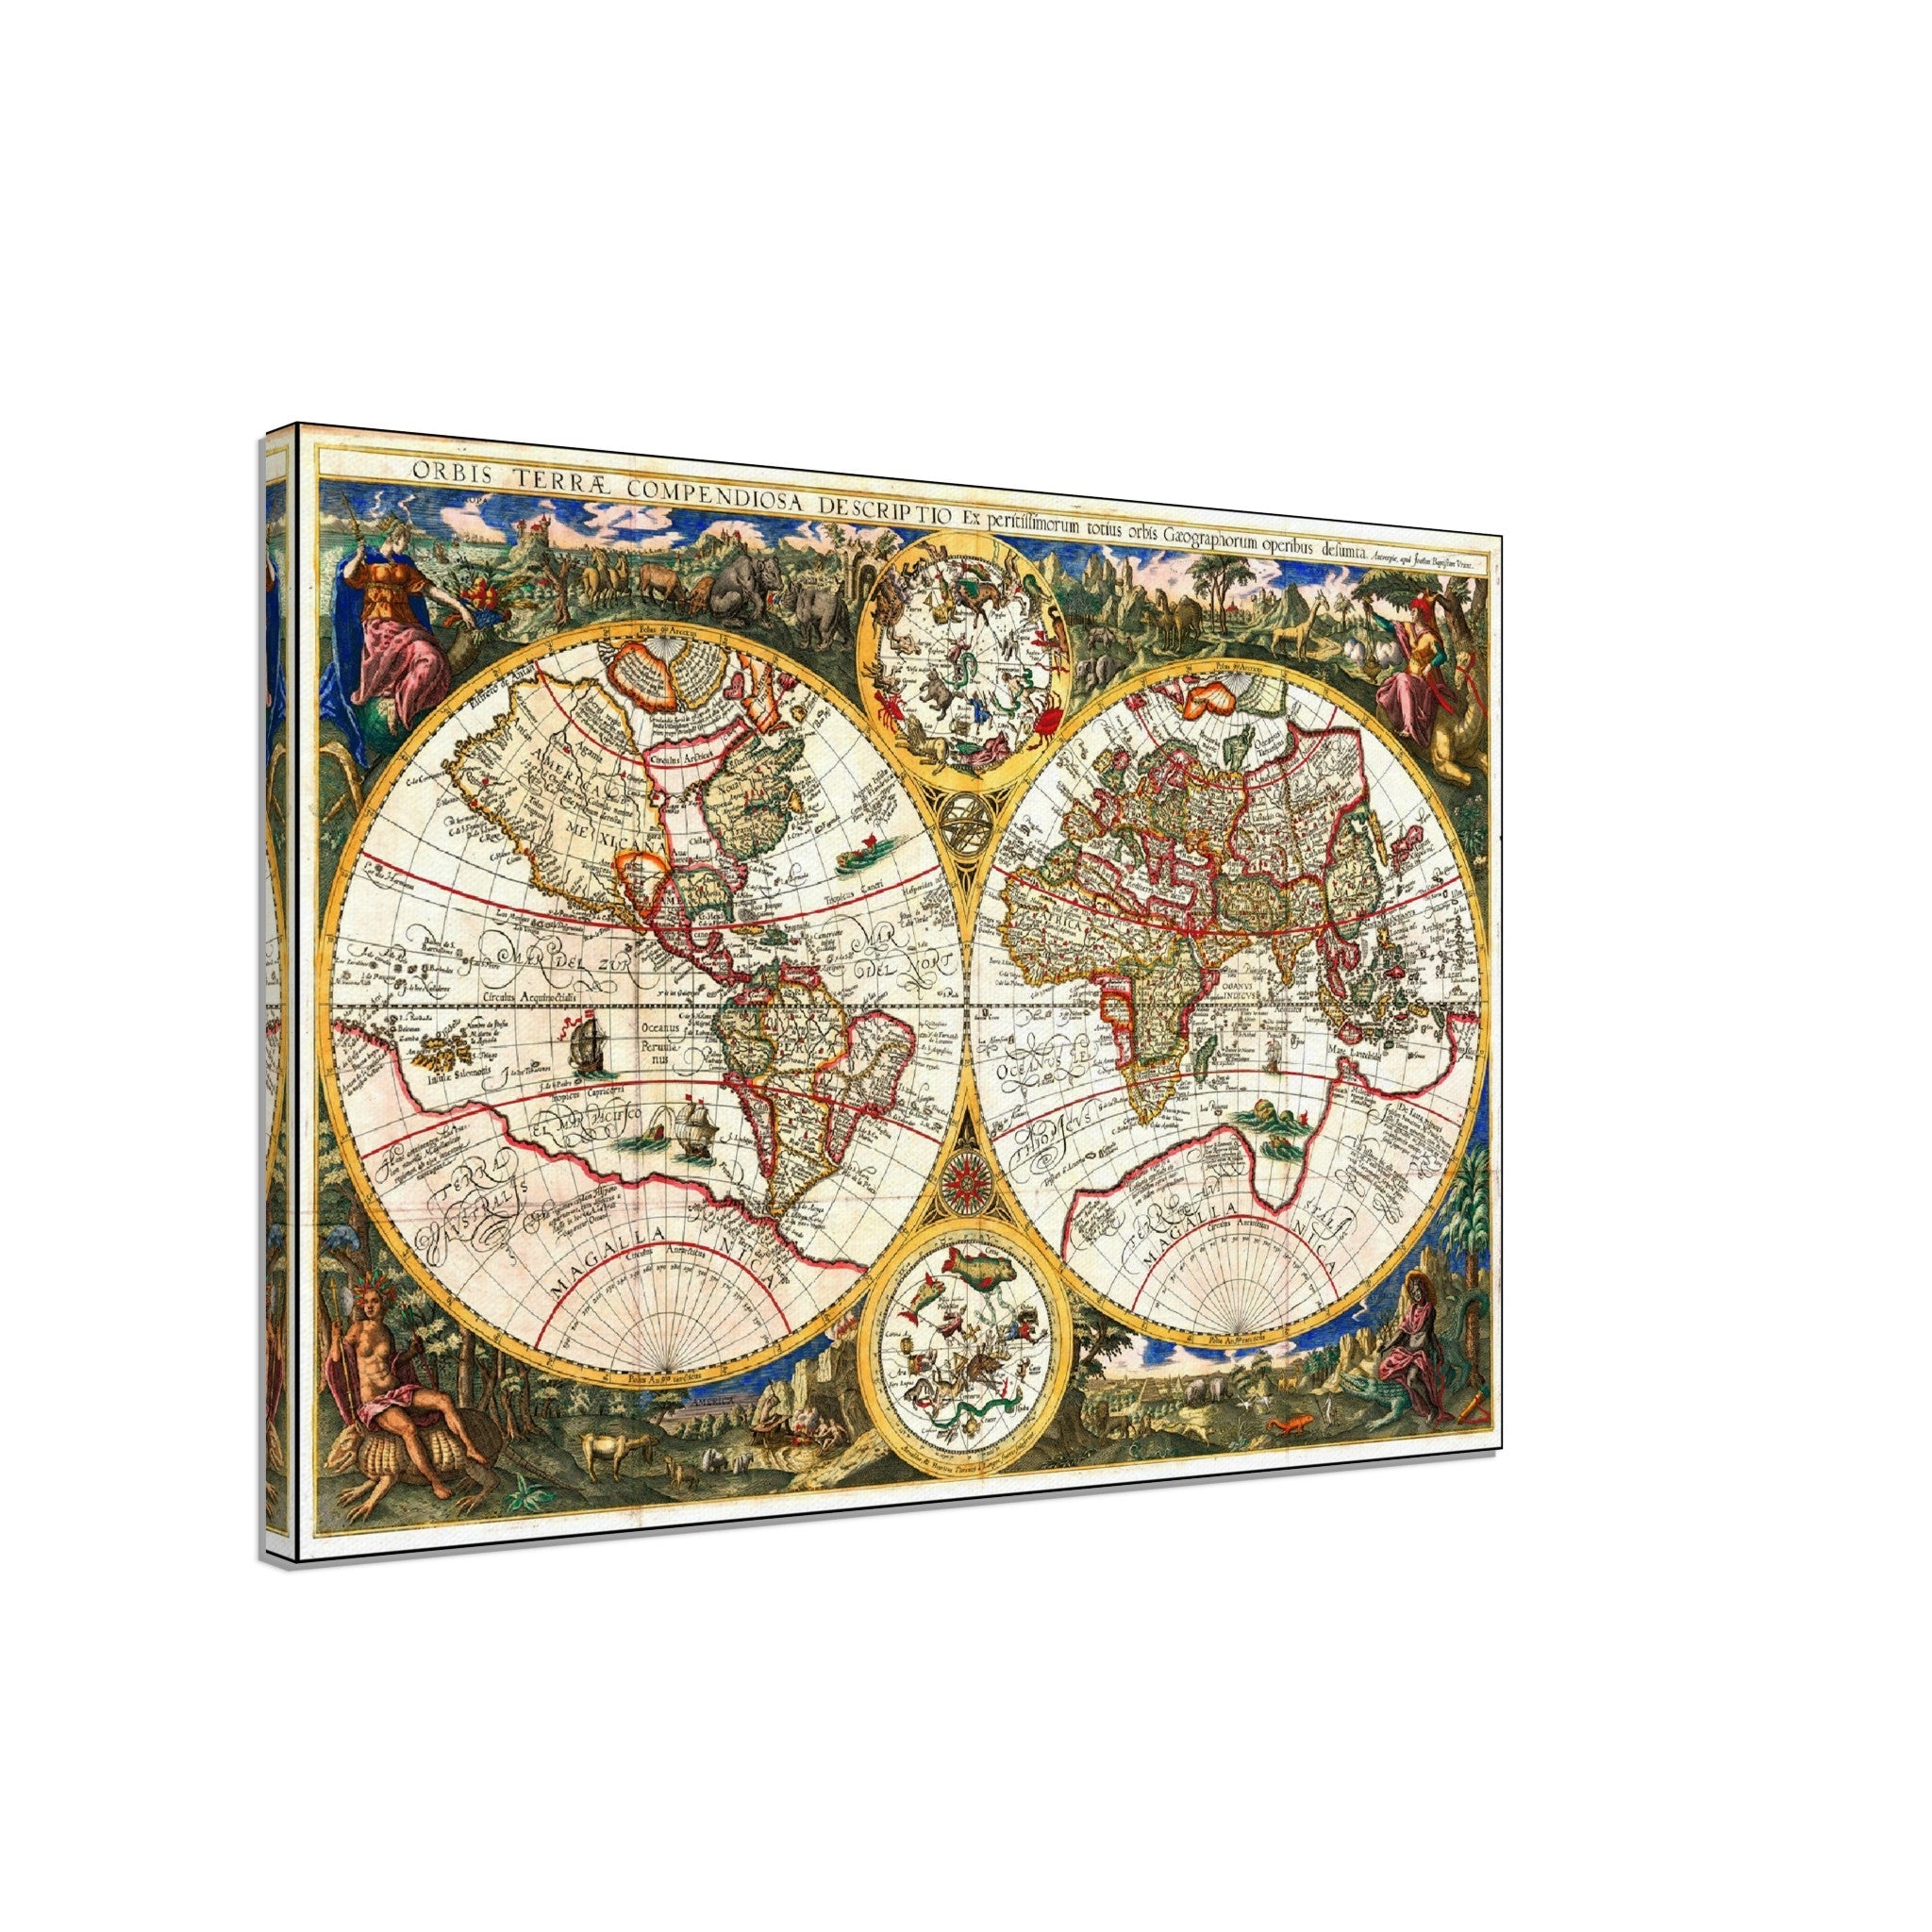 Old World Map Canvas, Vintage World Map Canvas Print From 1596, Orbis Terrae Compendiosa, Johannes Baptista Vrients - WallArtPrints4U